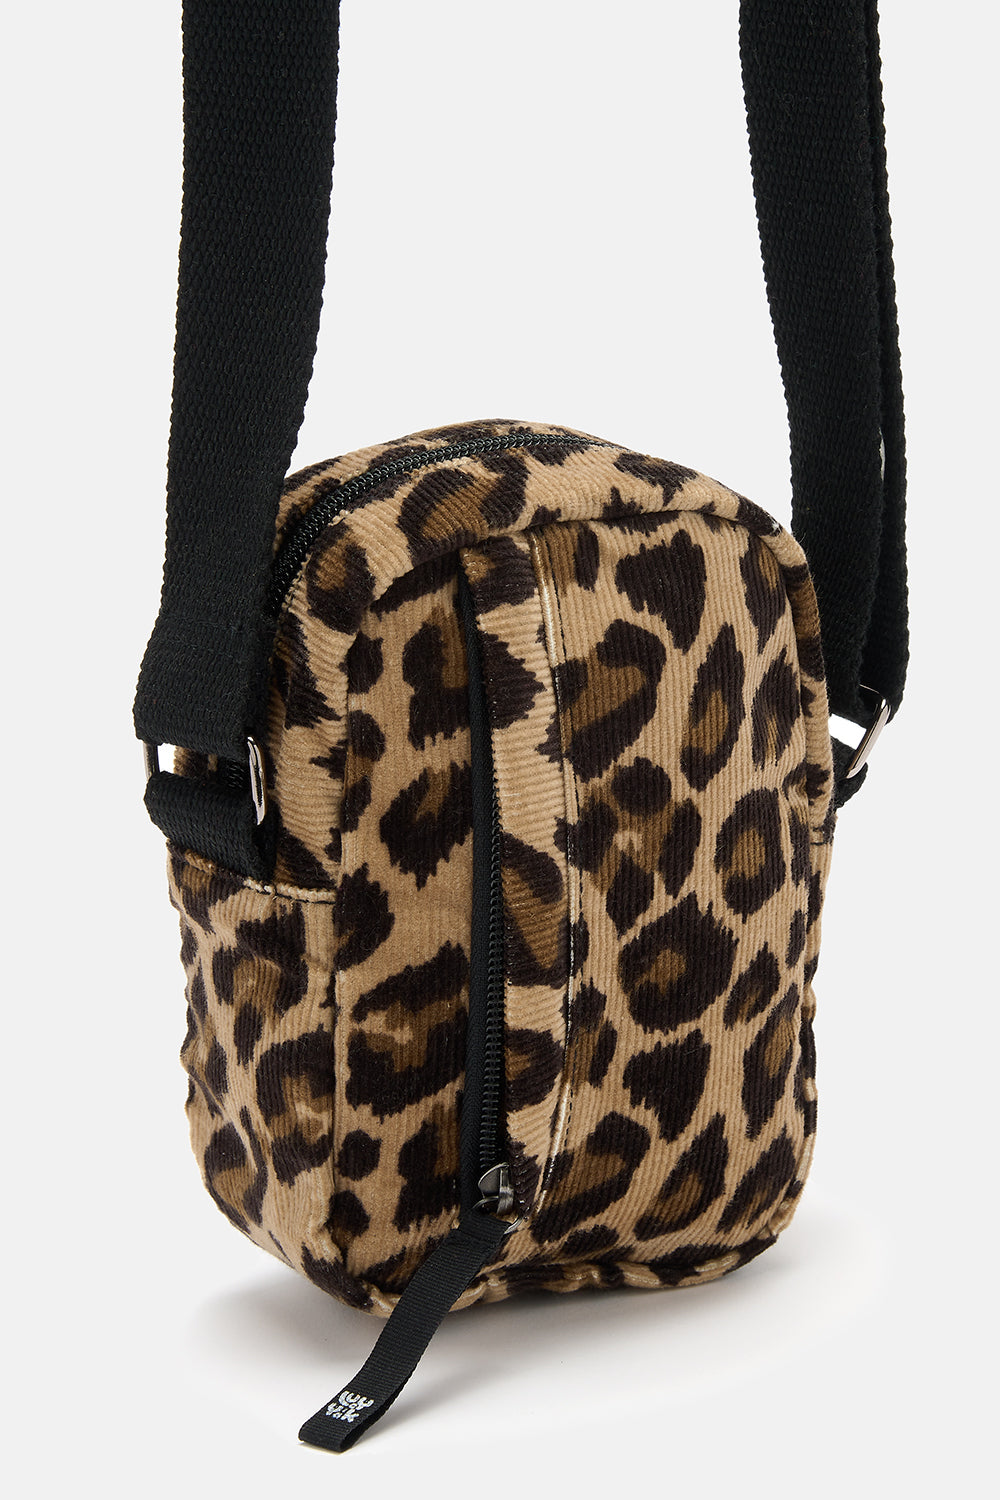 Leopard Print Bag - Brady Design